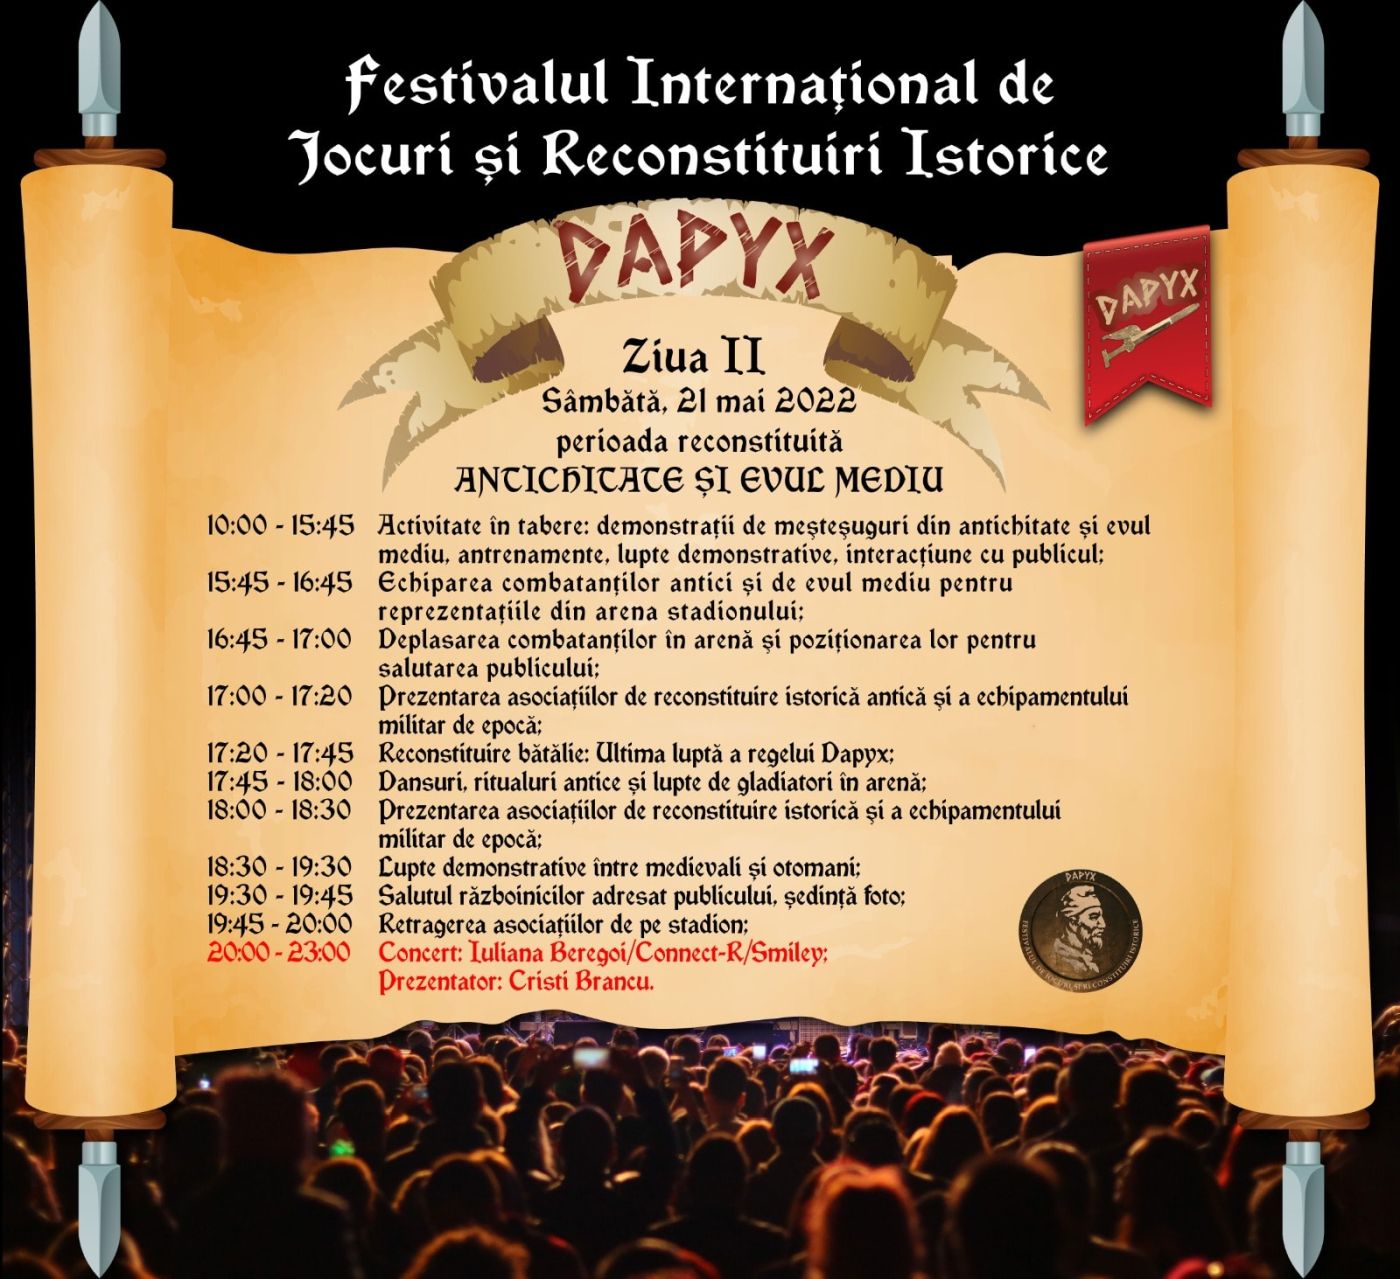 Dapyx, 21 mai 2022: reconstituirea perioadelor Antichitate și Ev Mediu, concerte Iuliana Beregoi, Connect-R, Smiley